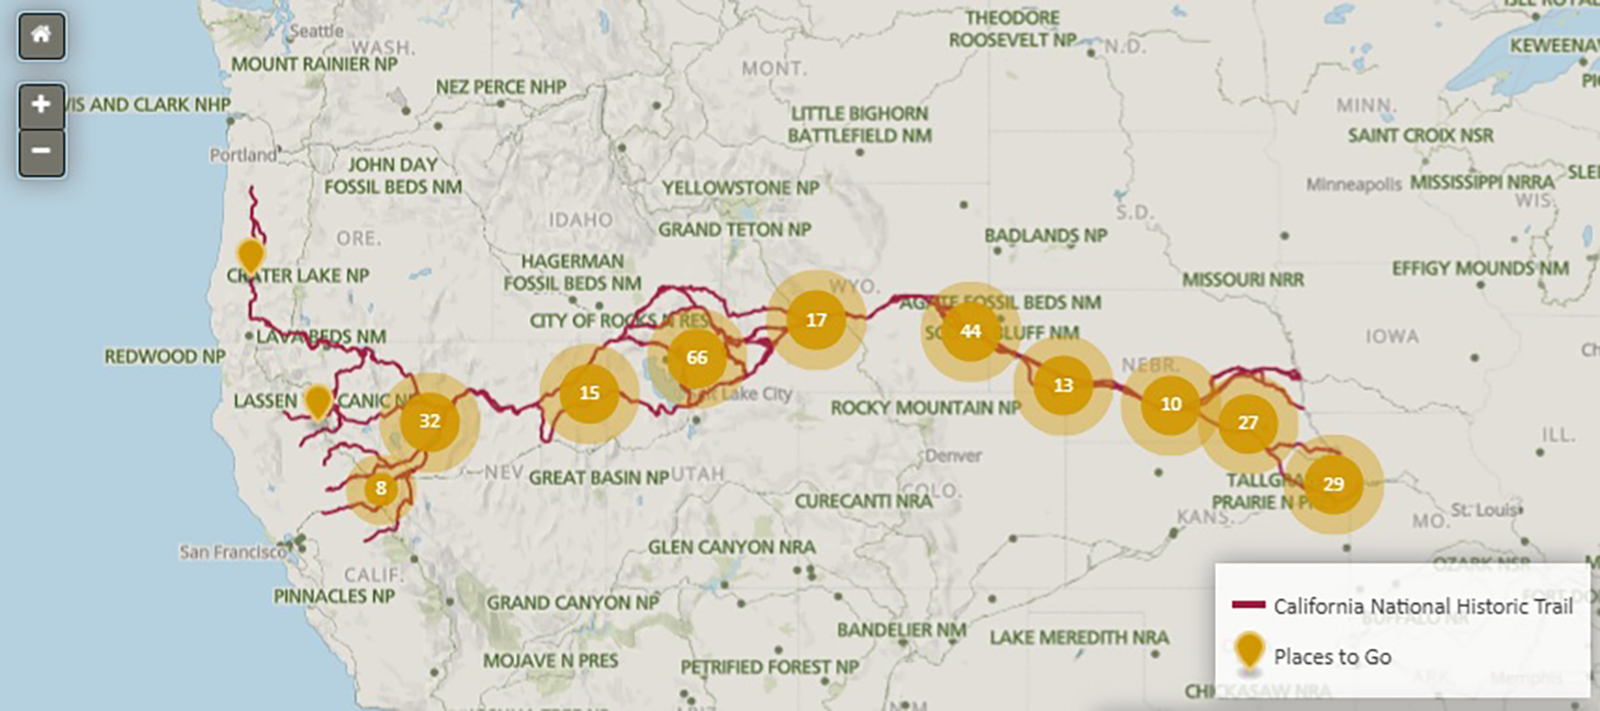 gold rush trail map